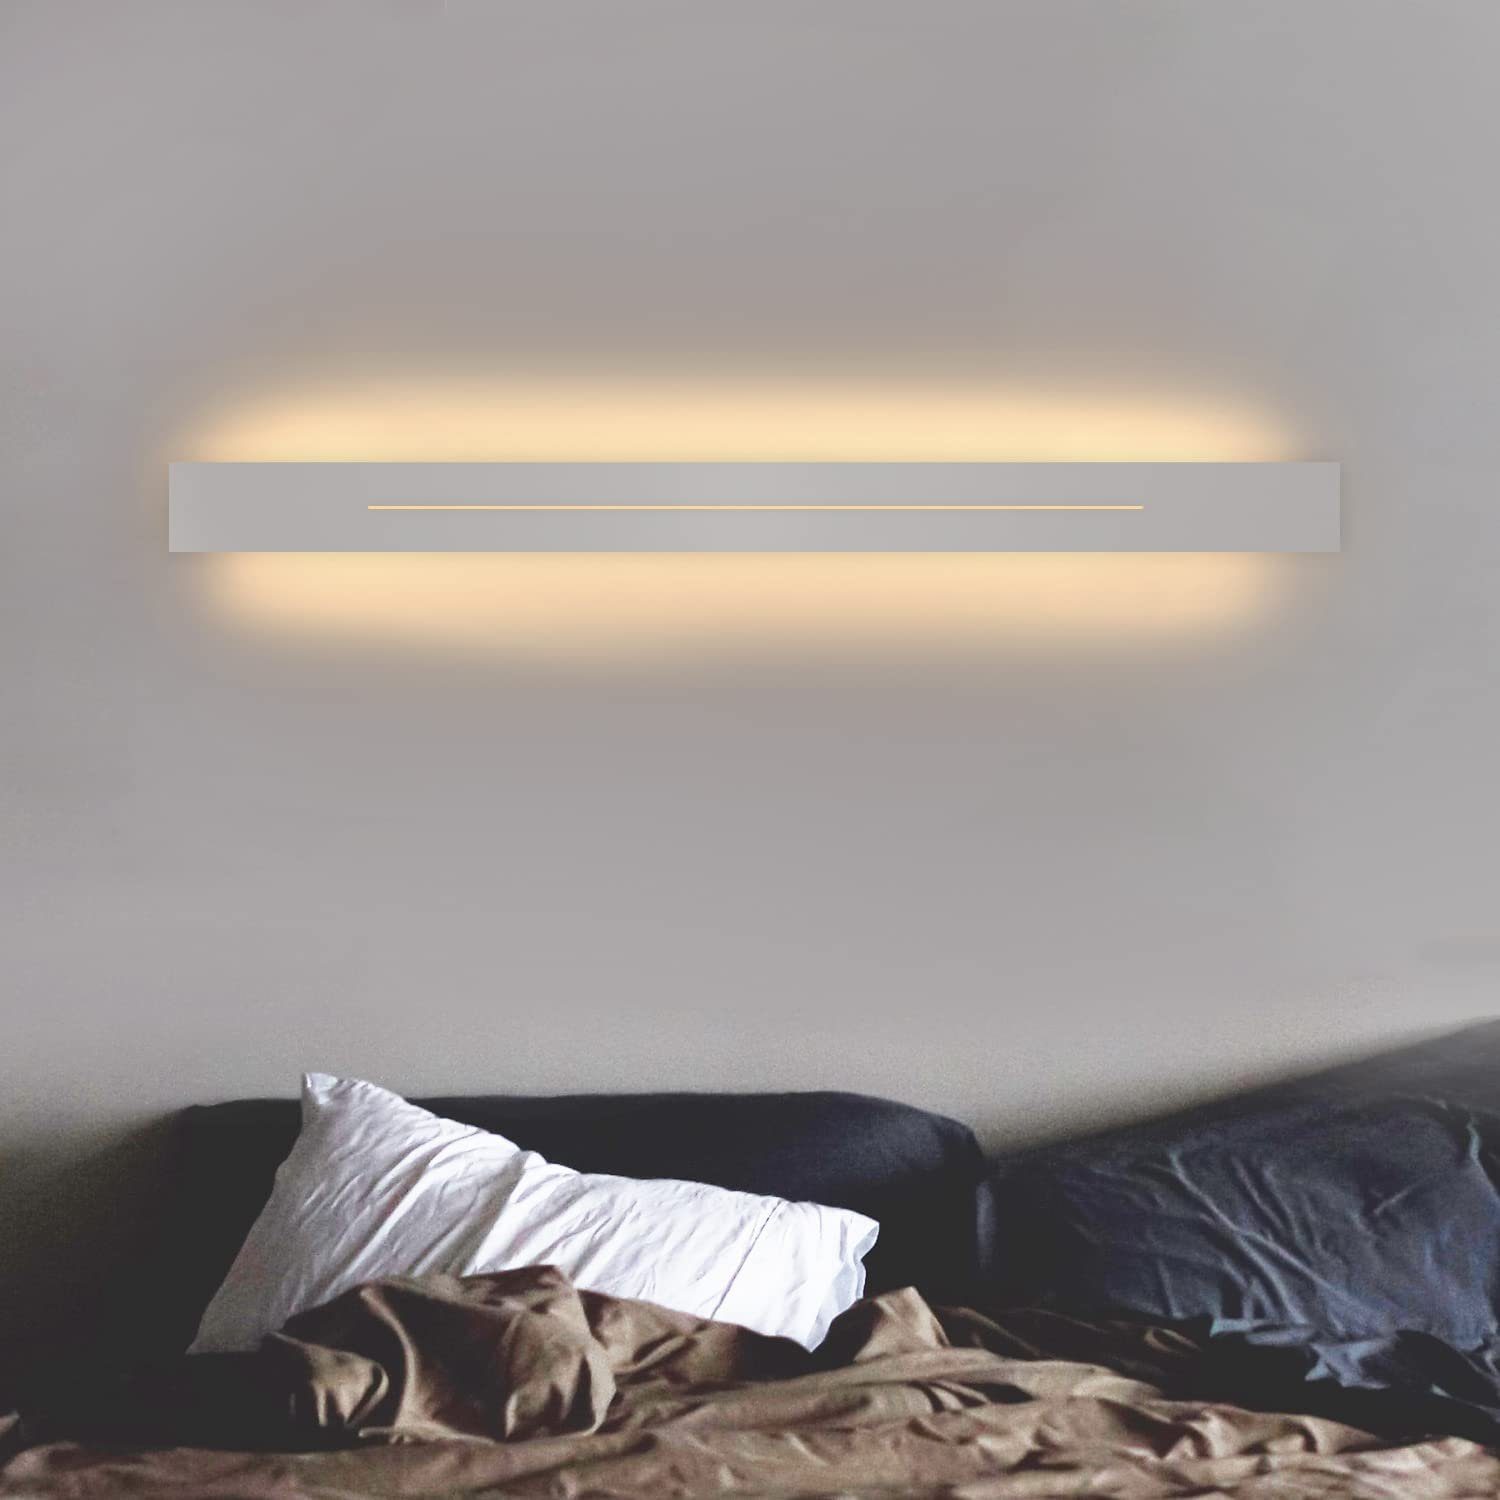 Nettlife LED Wandleuchte innen 60CM Modern Wandlampe Warmweiss Weiß 20W Wandbeleuchtung, LED fest integriert, Warmweiß, für Treppenhaus Schlafzimmer Flur Wohnzimmer Kinderzimmer